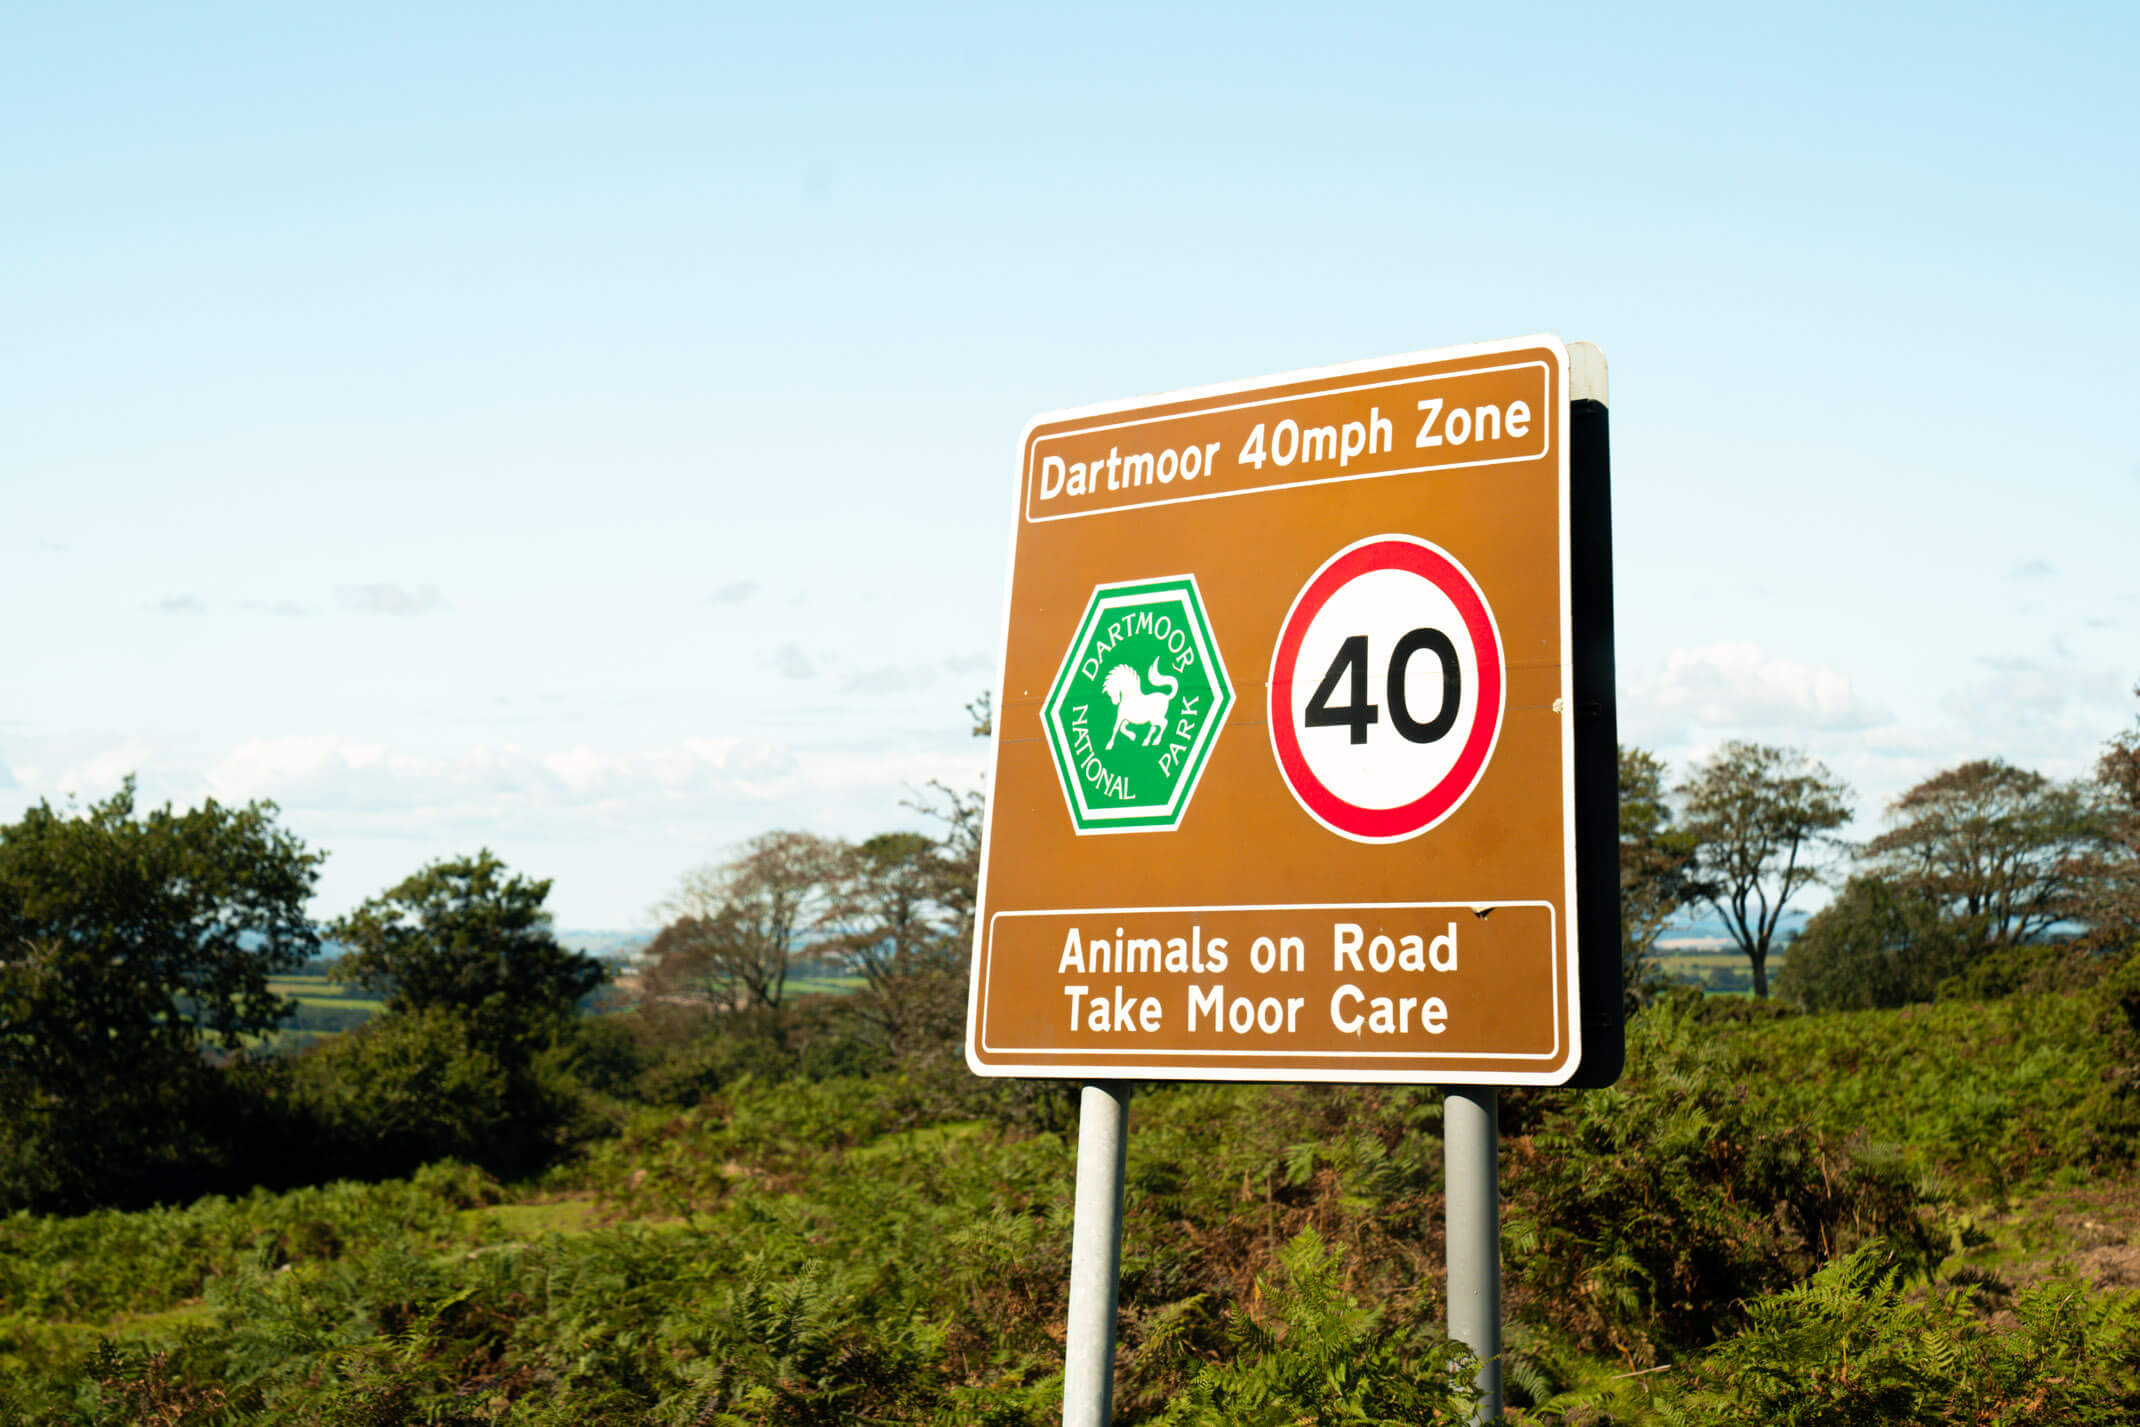 A guide to exploring Dartmoor National Park, Devon